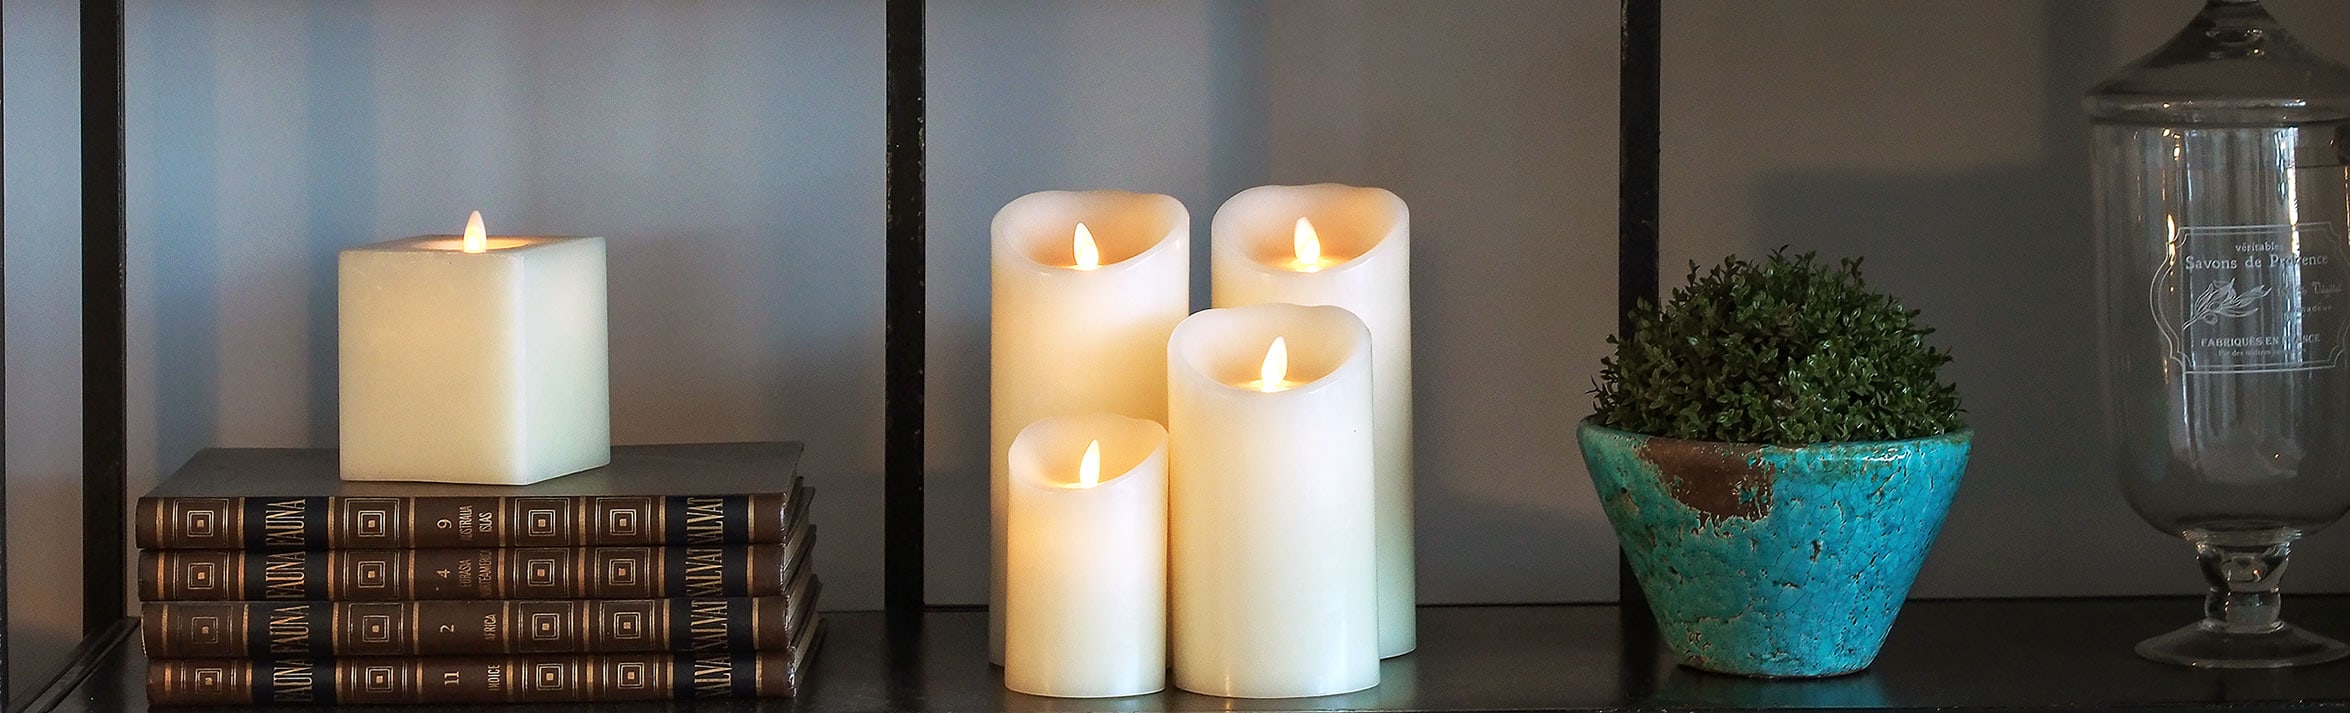 heritage-lighting-matters-smart-candles